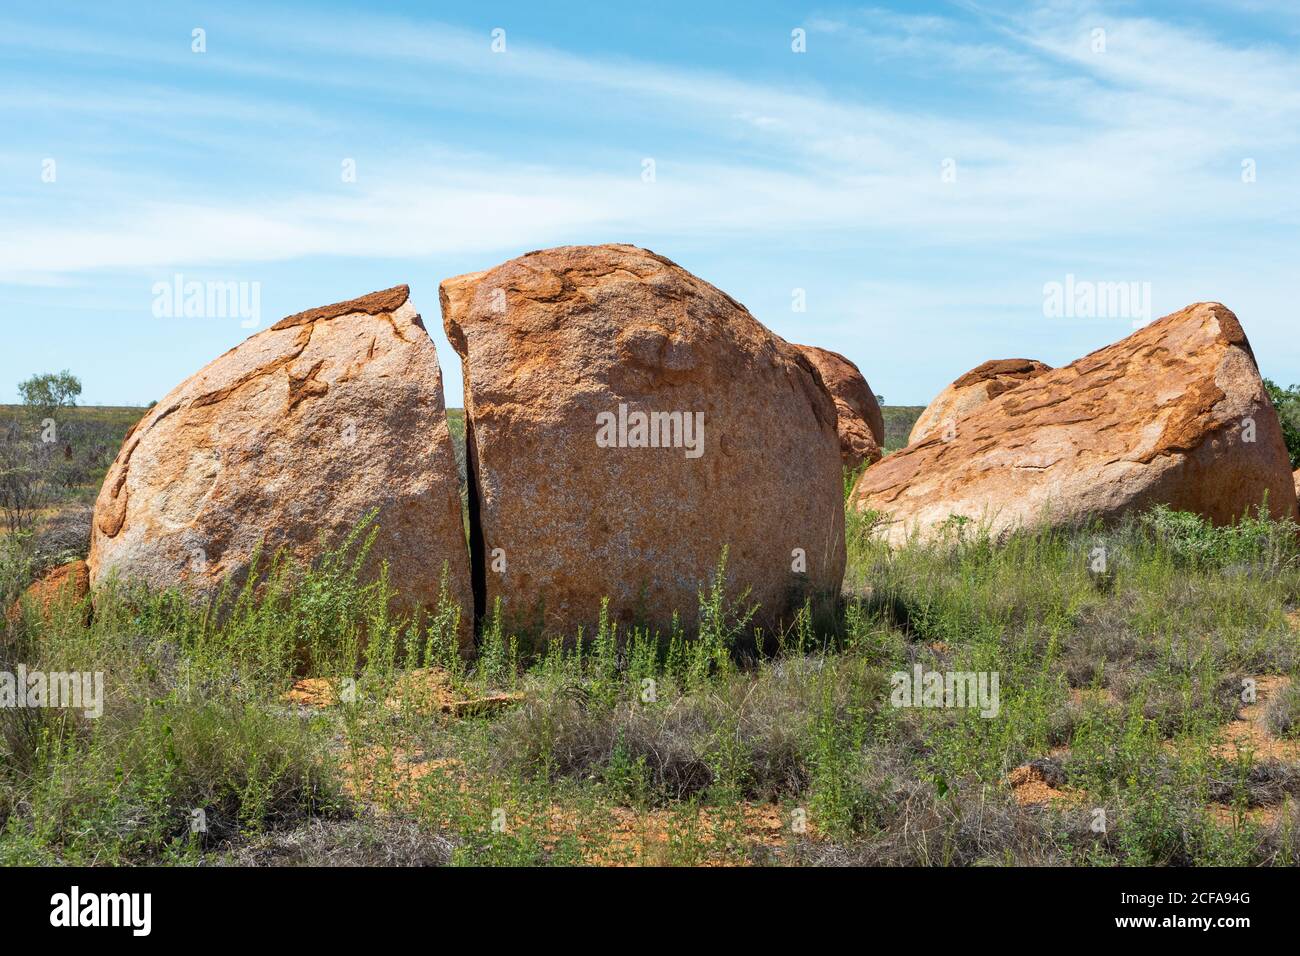 Close up picture of Devils Marbles. Sacred aboriginal place with massive granite boulders. Symbol of Australia's outback. Aboriginal name Karlu Karlu Stock Photo